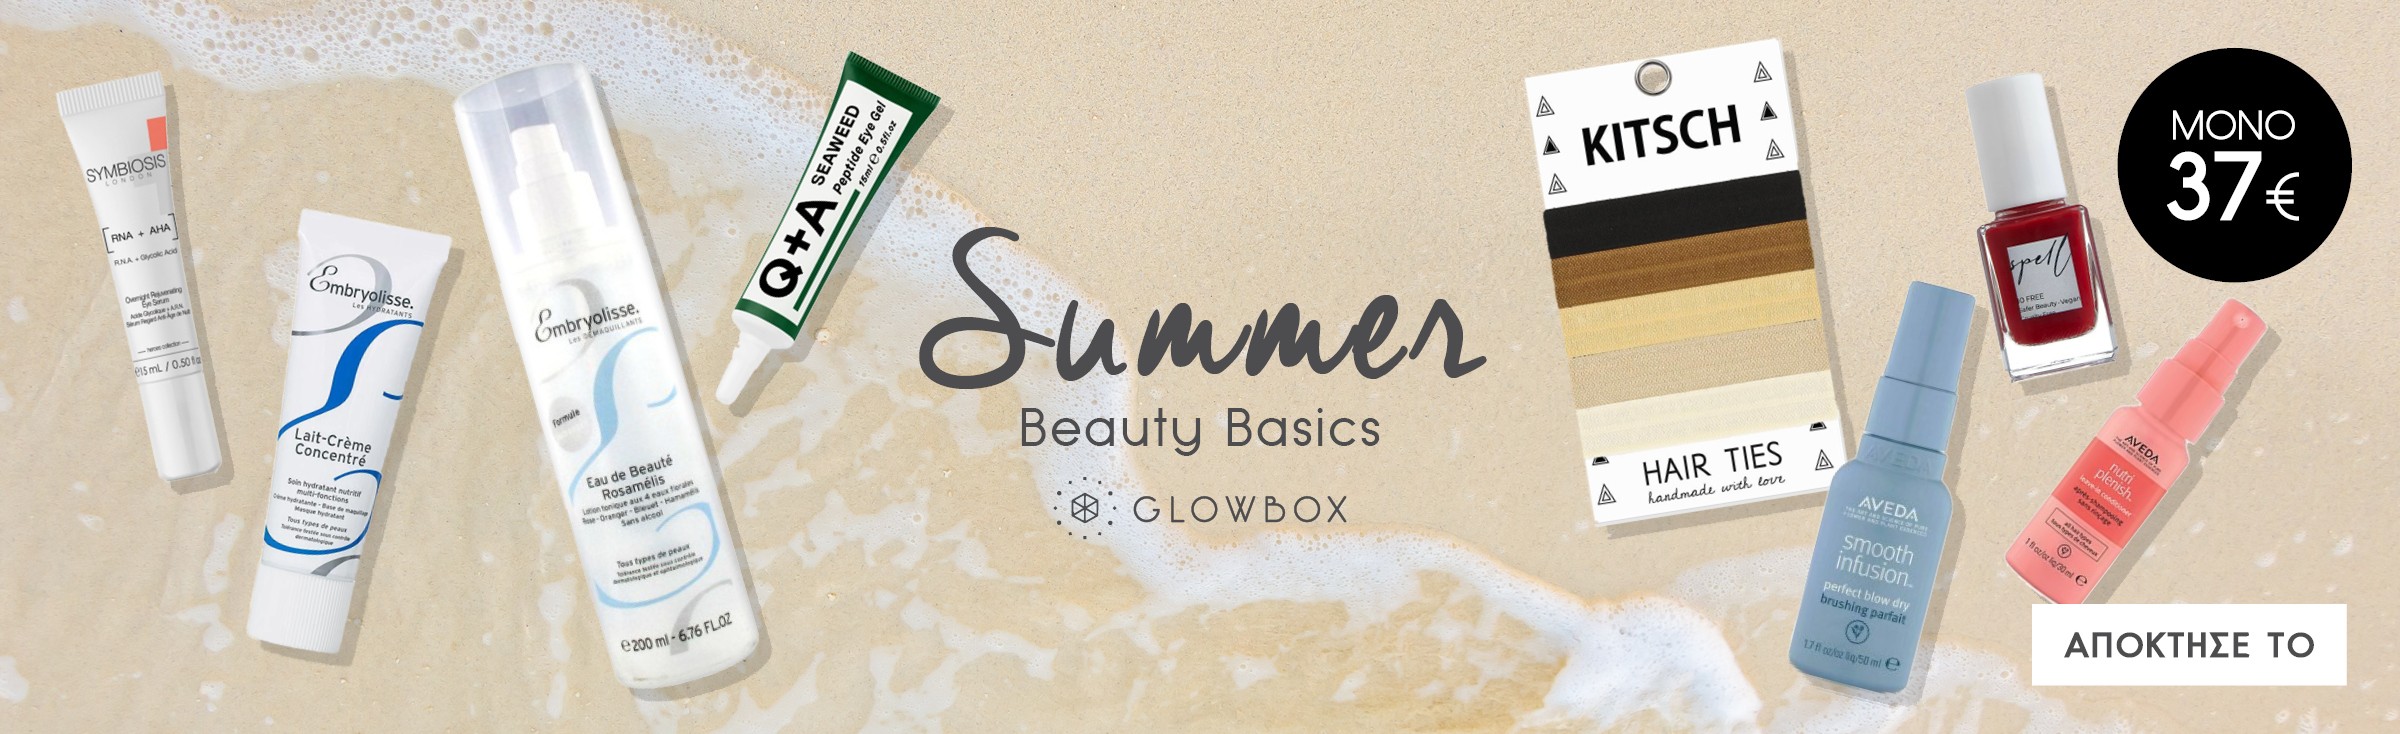 The 'Summer Beauty Basics' Glowbox